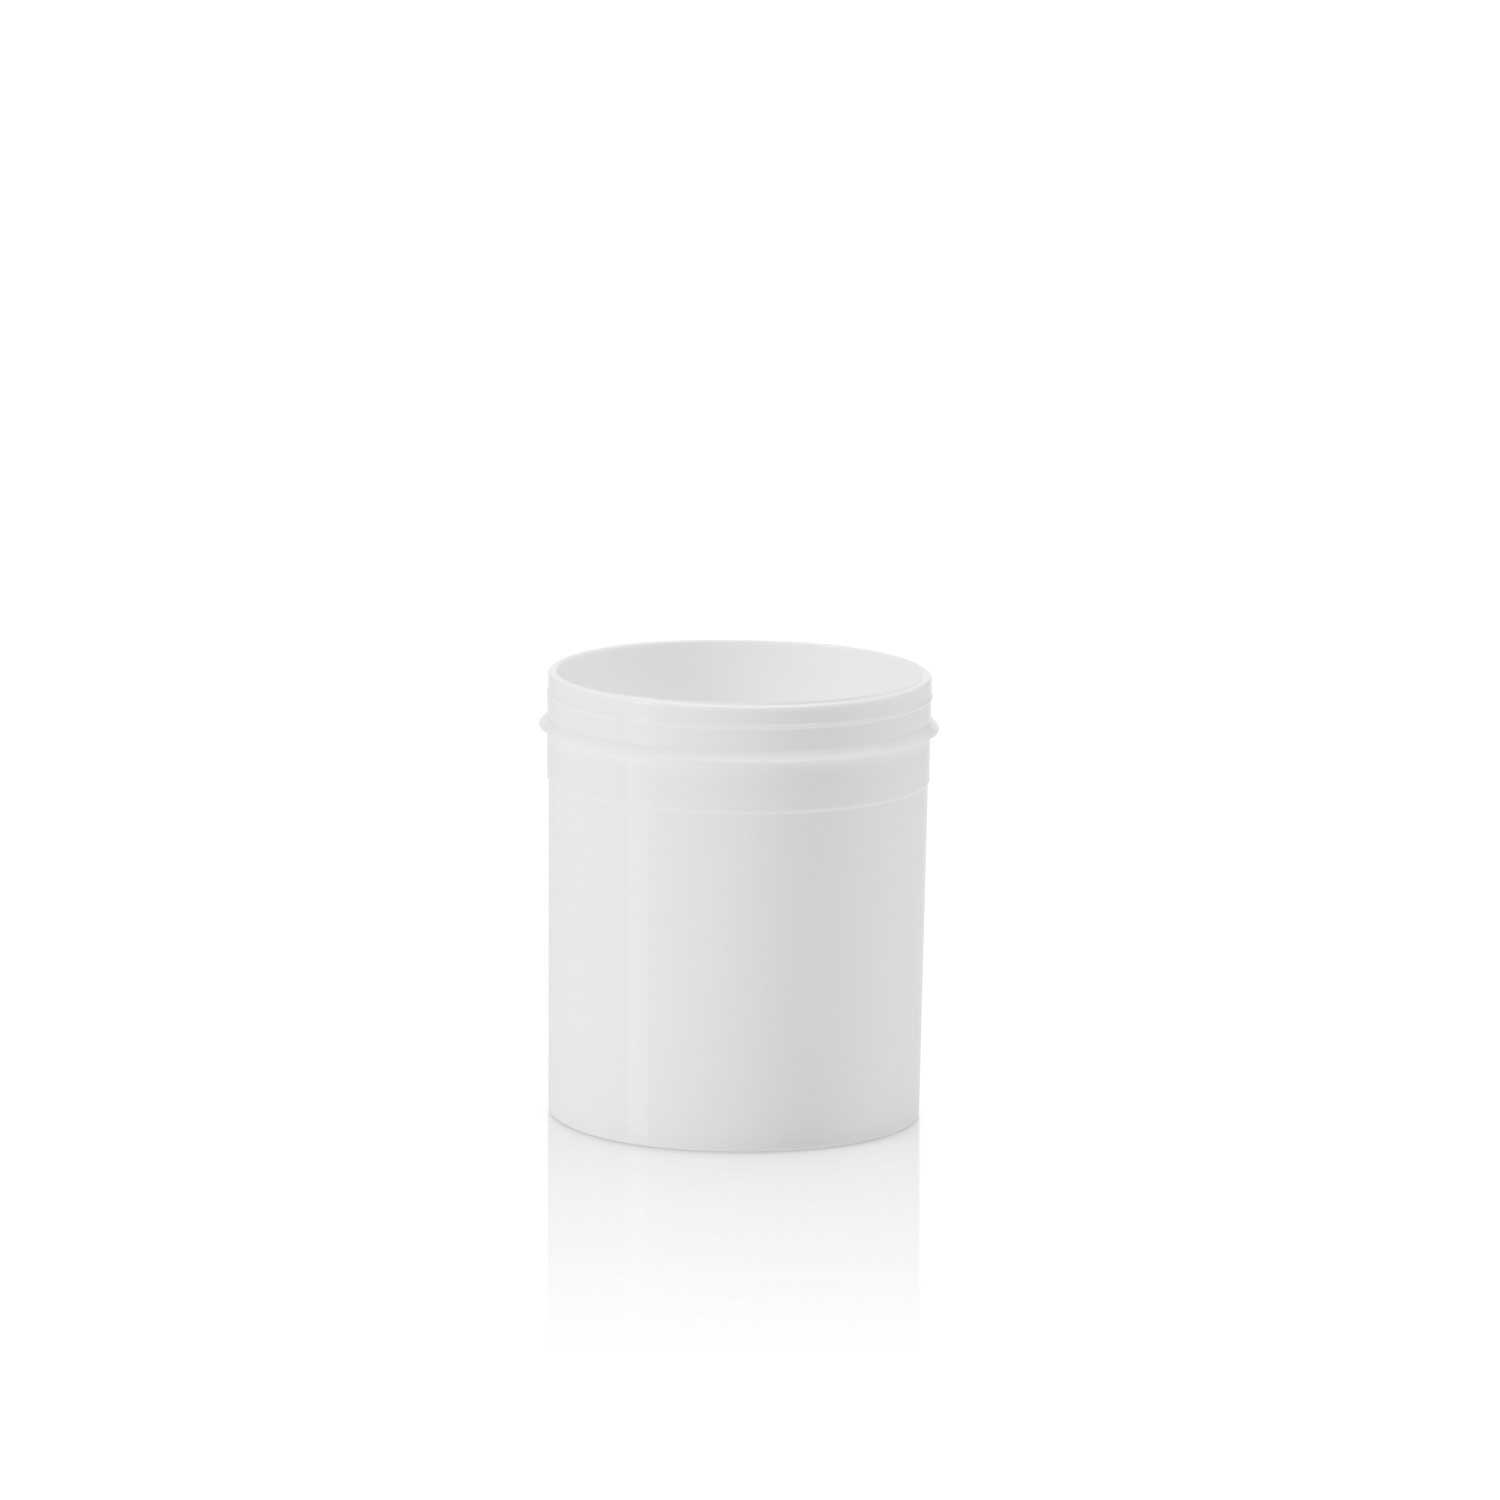 100ml White PP Tamper Evident Snapsecure Jar